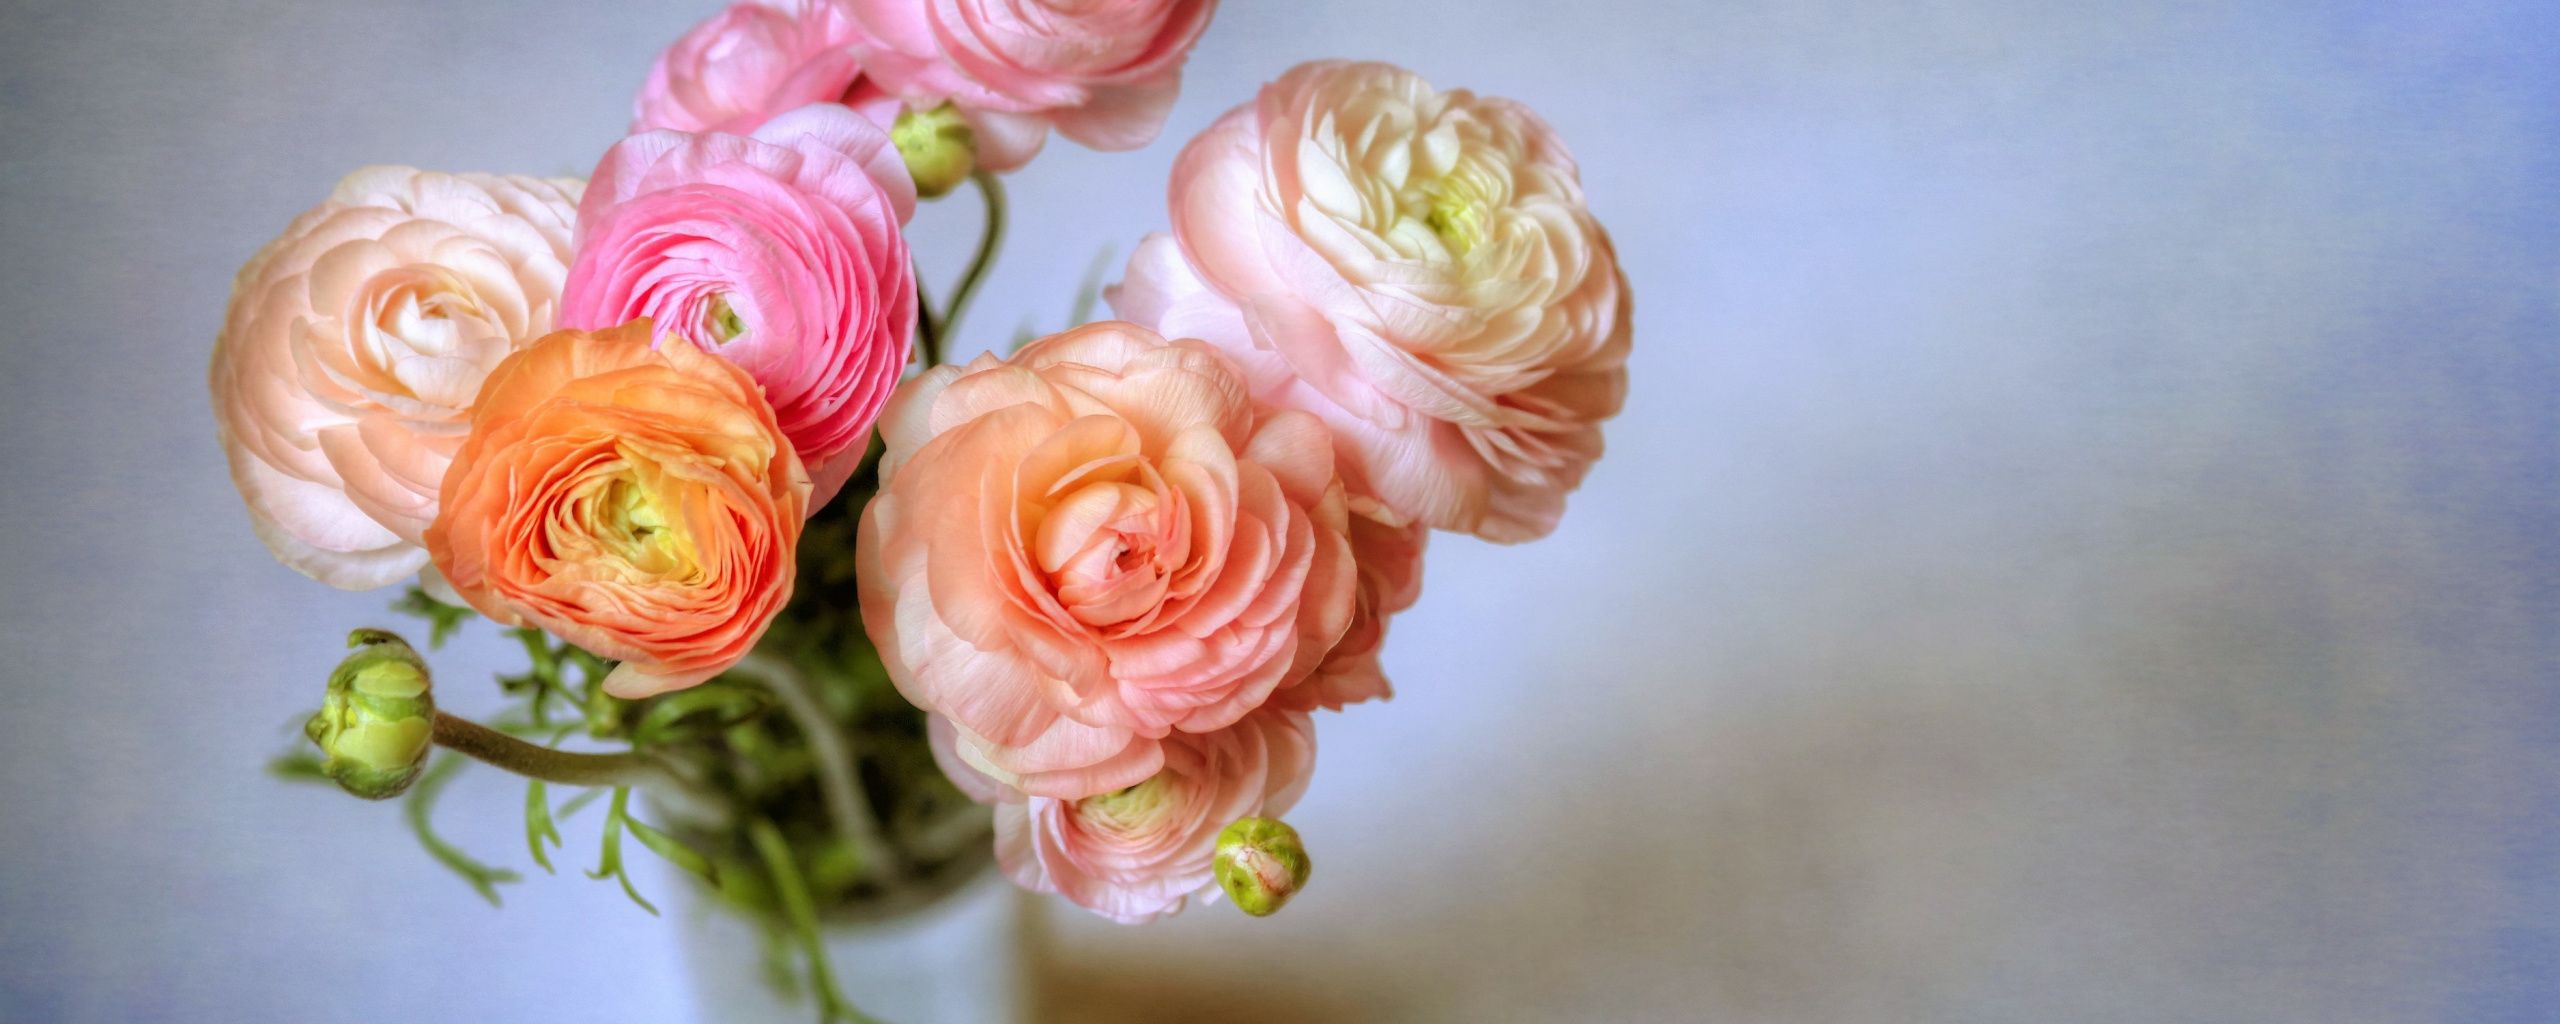 Download 2560x1024 wallpaper colorful, ranunculus, flowers, vase